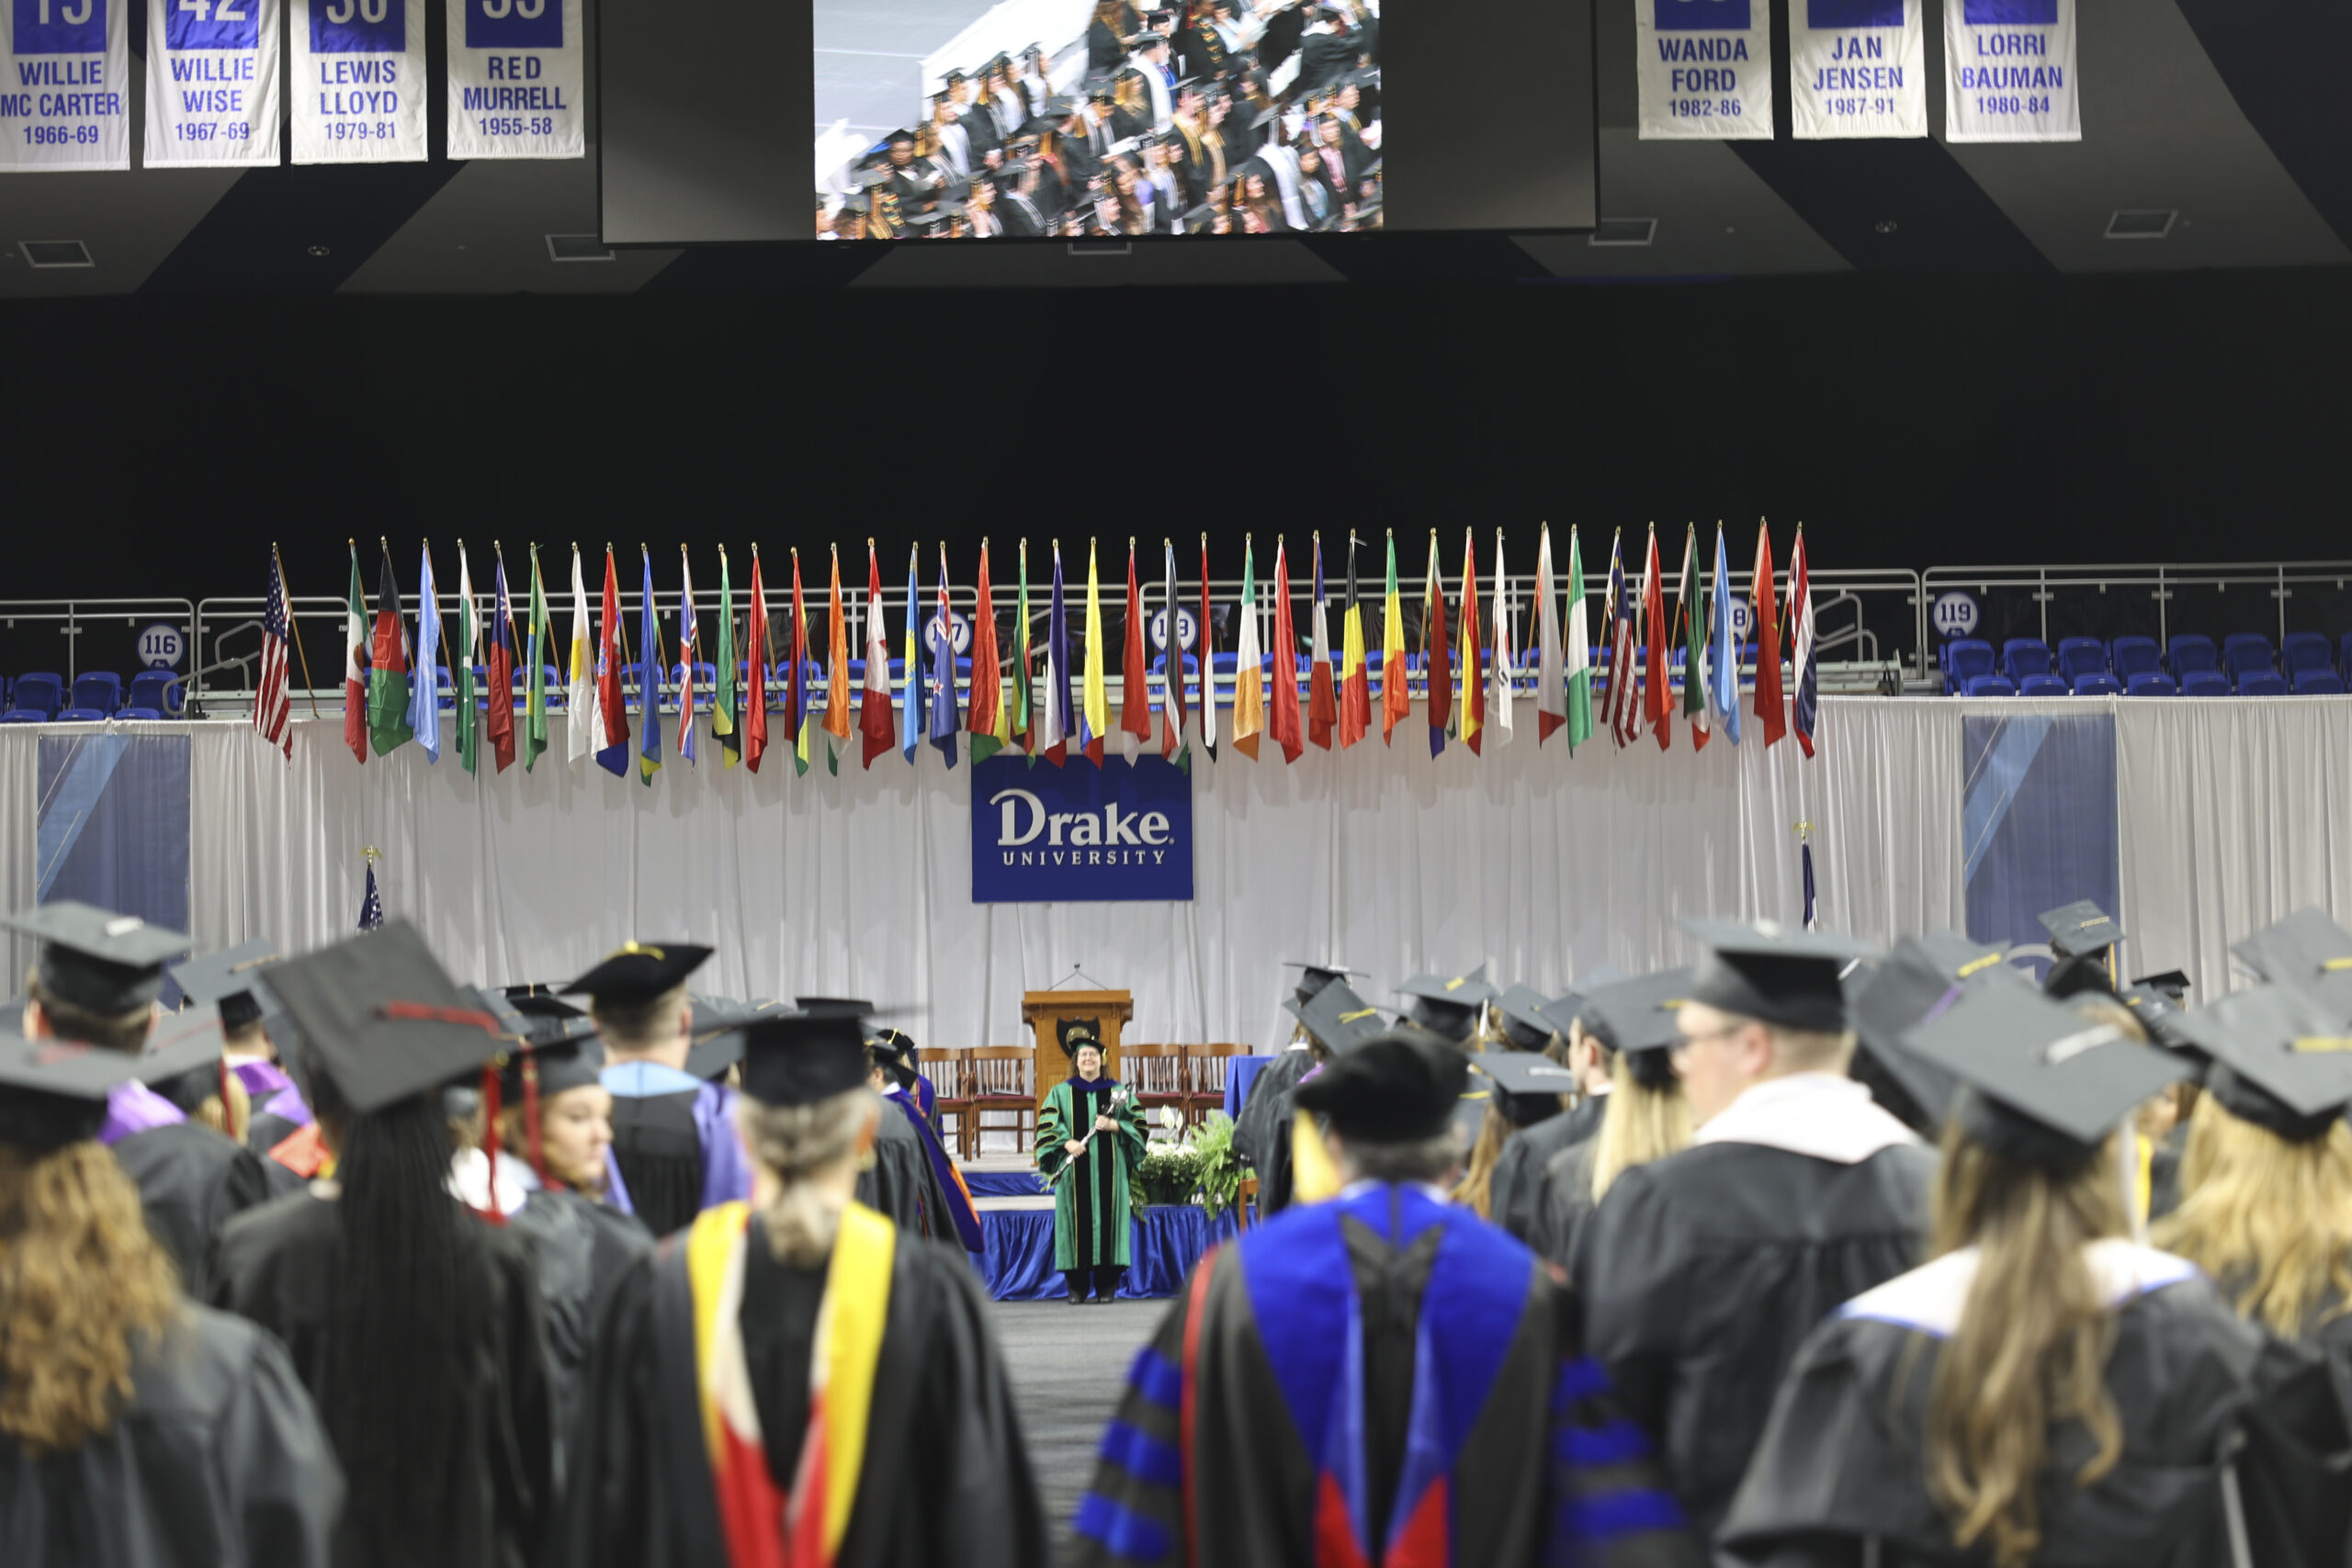 Drake University commencement ceremony set for Saturday in the Knapp Center